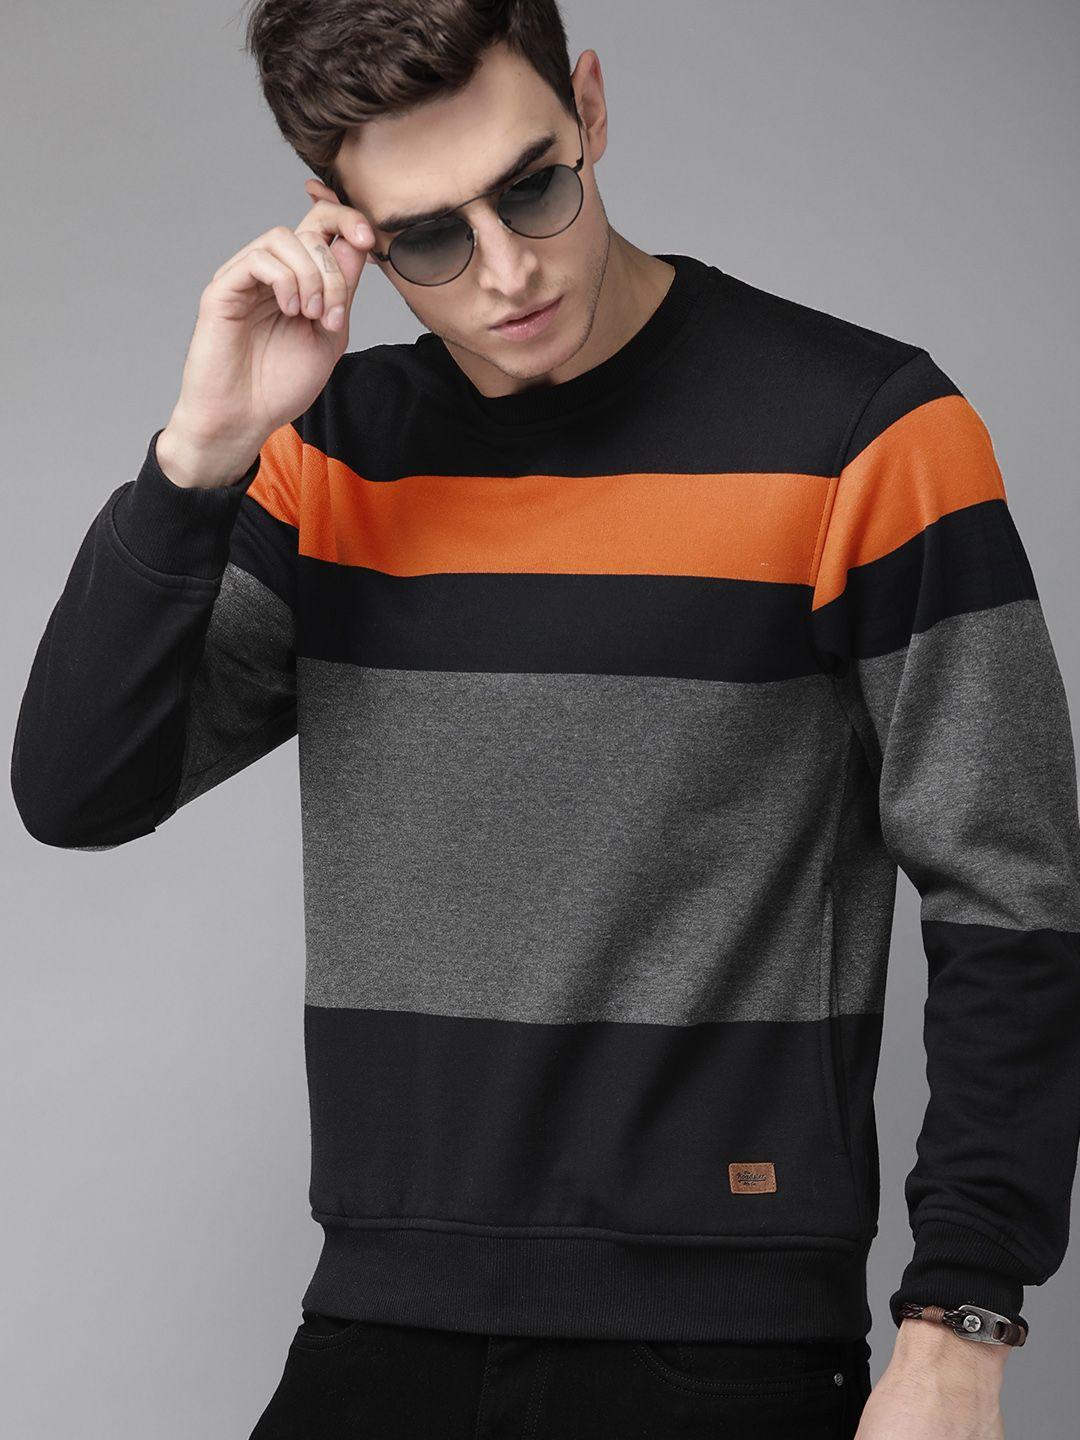 the roadster lifestyle co men charcoal grey & black colourblocked sweatshirt